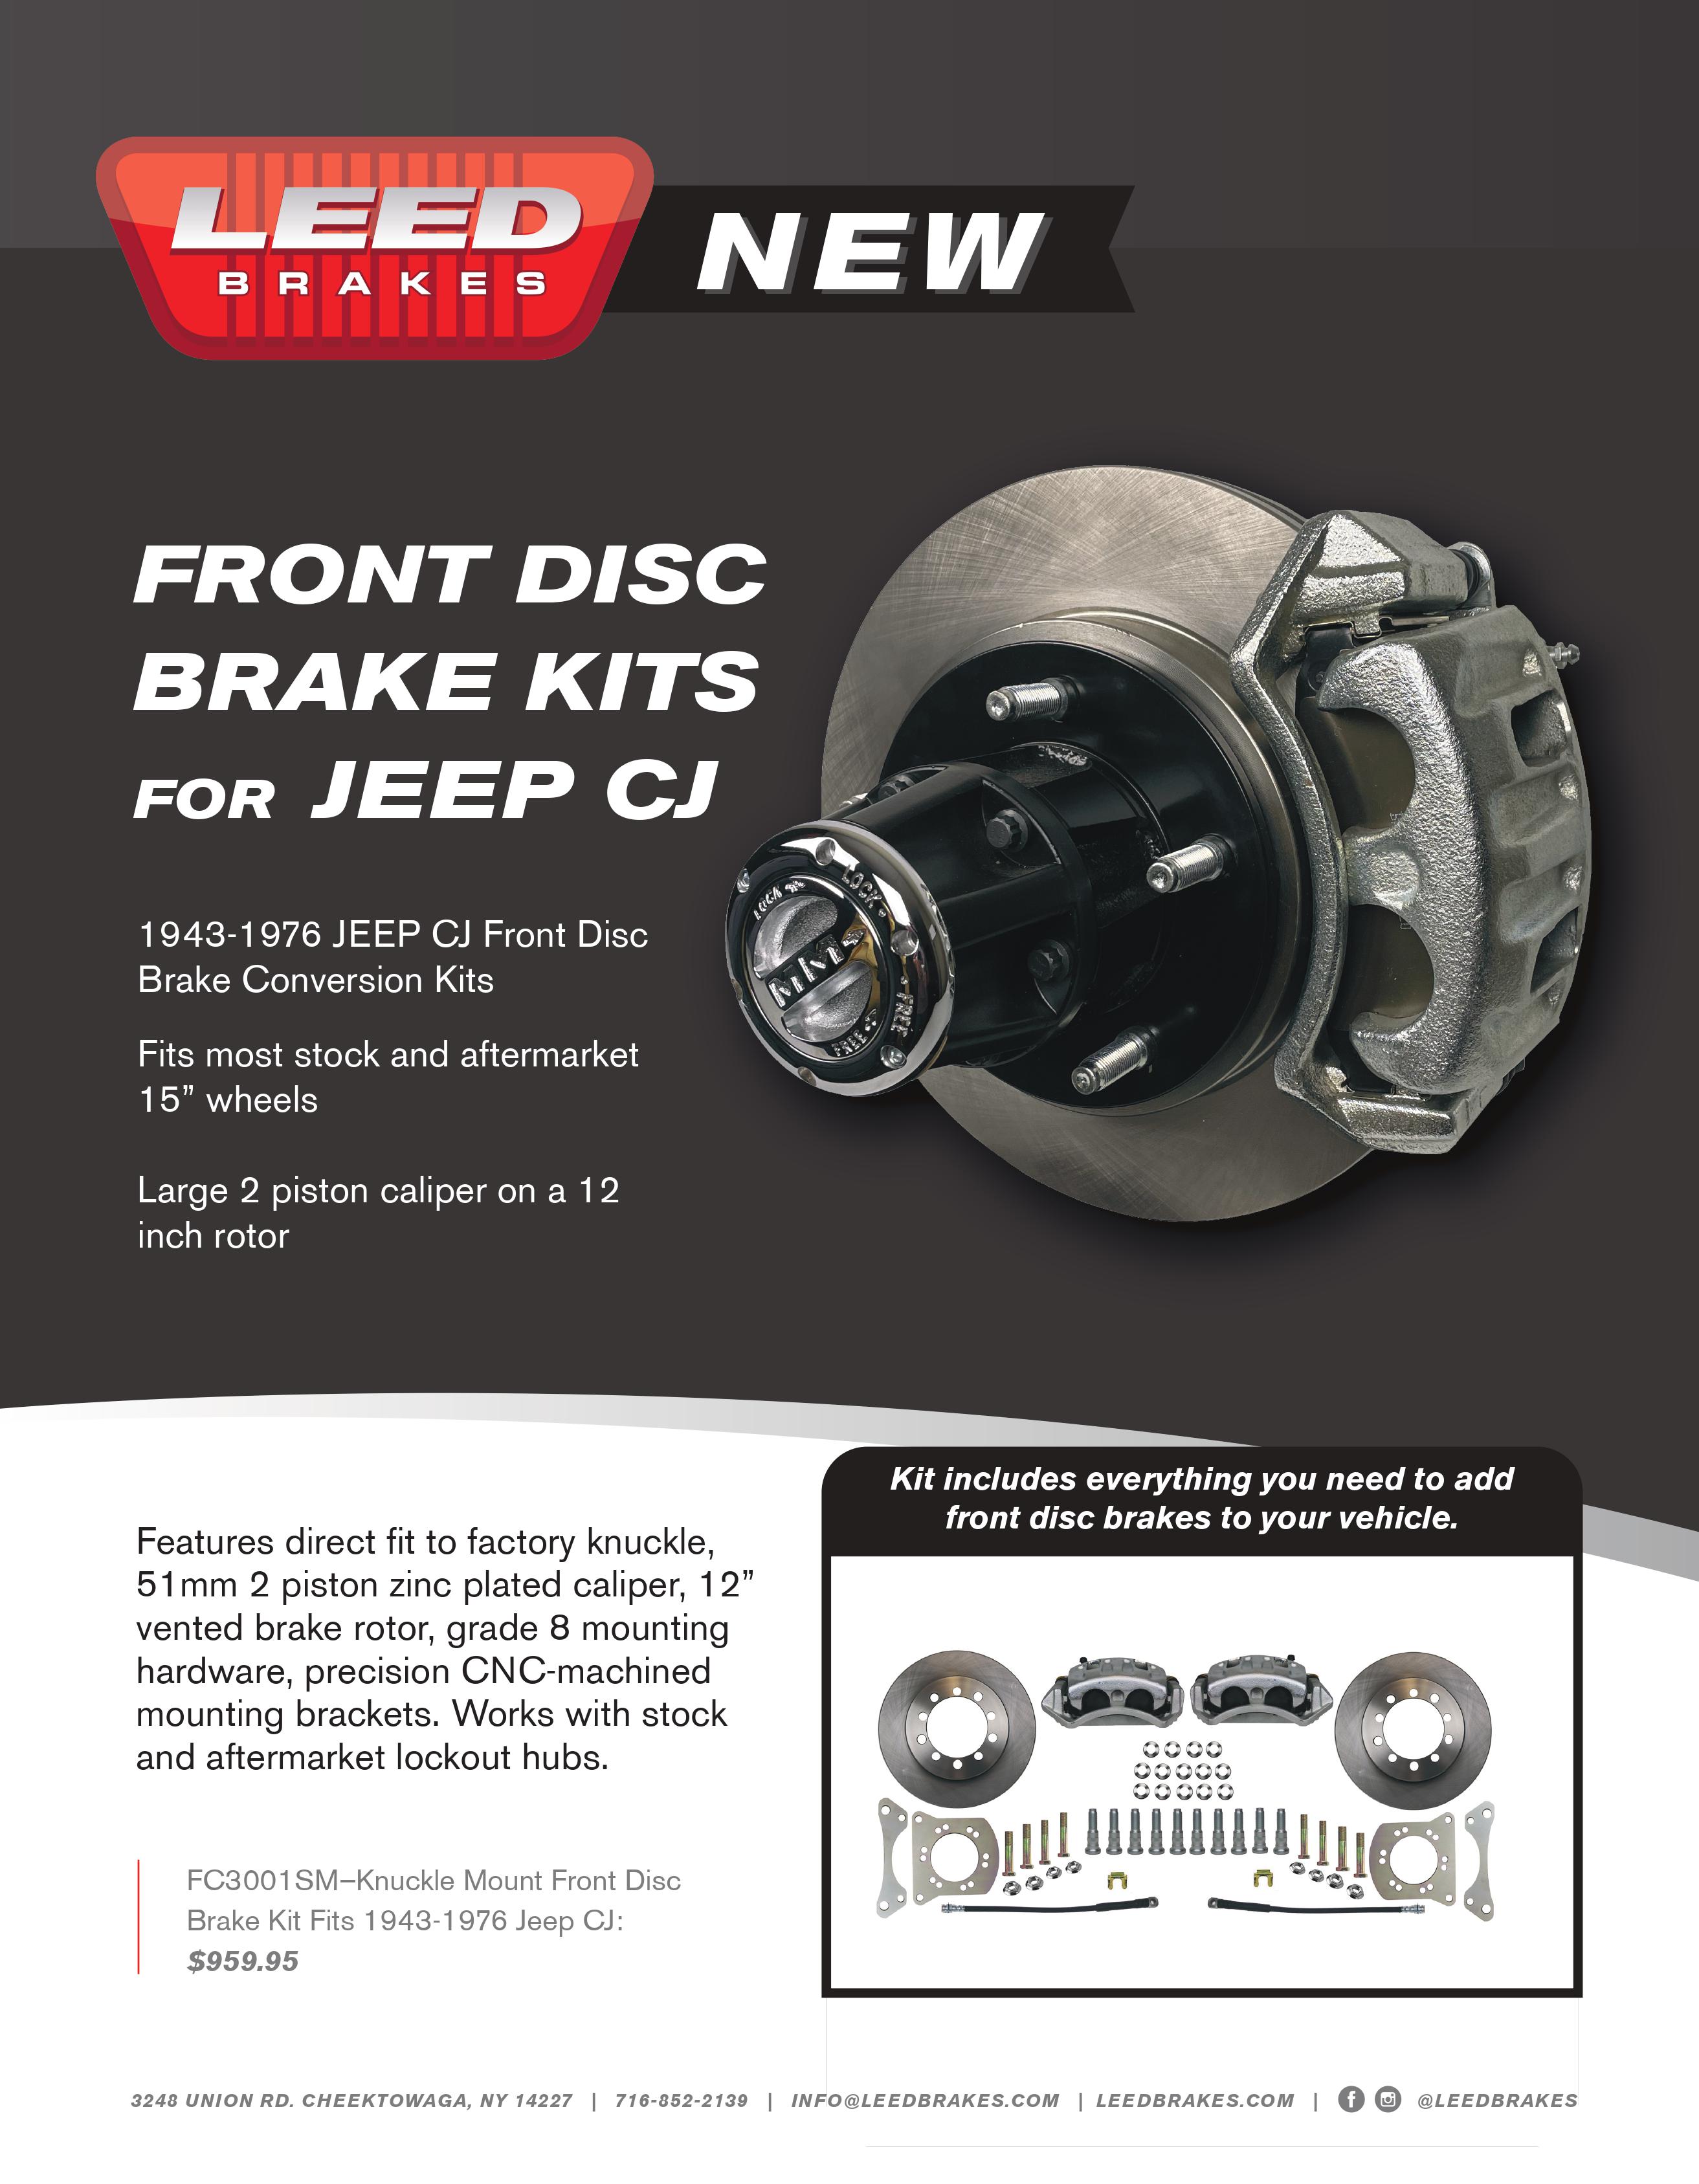 LEED Brakes Front Disc Brake Kits for Jeep CJ